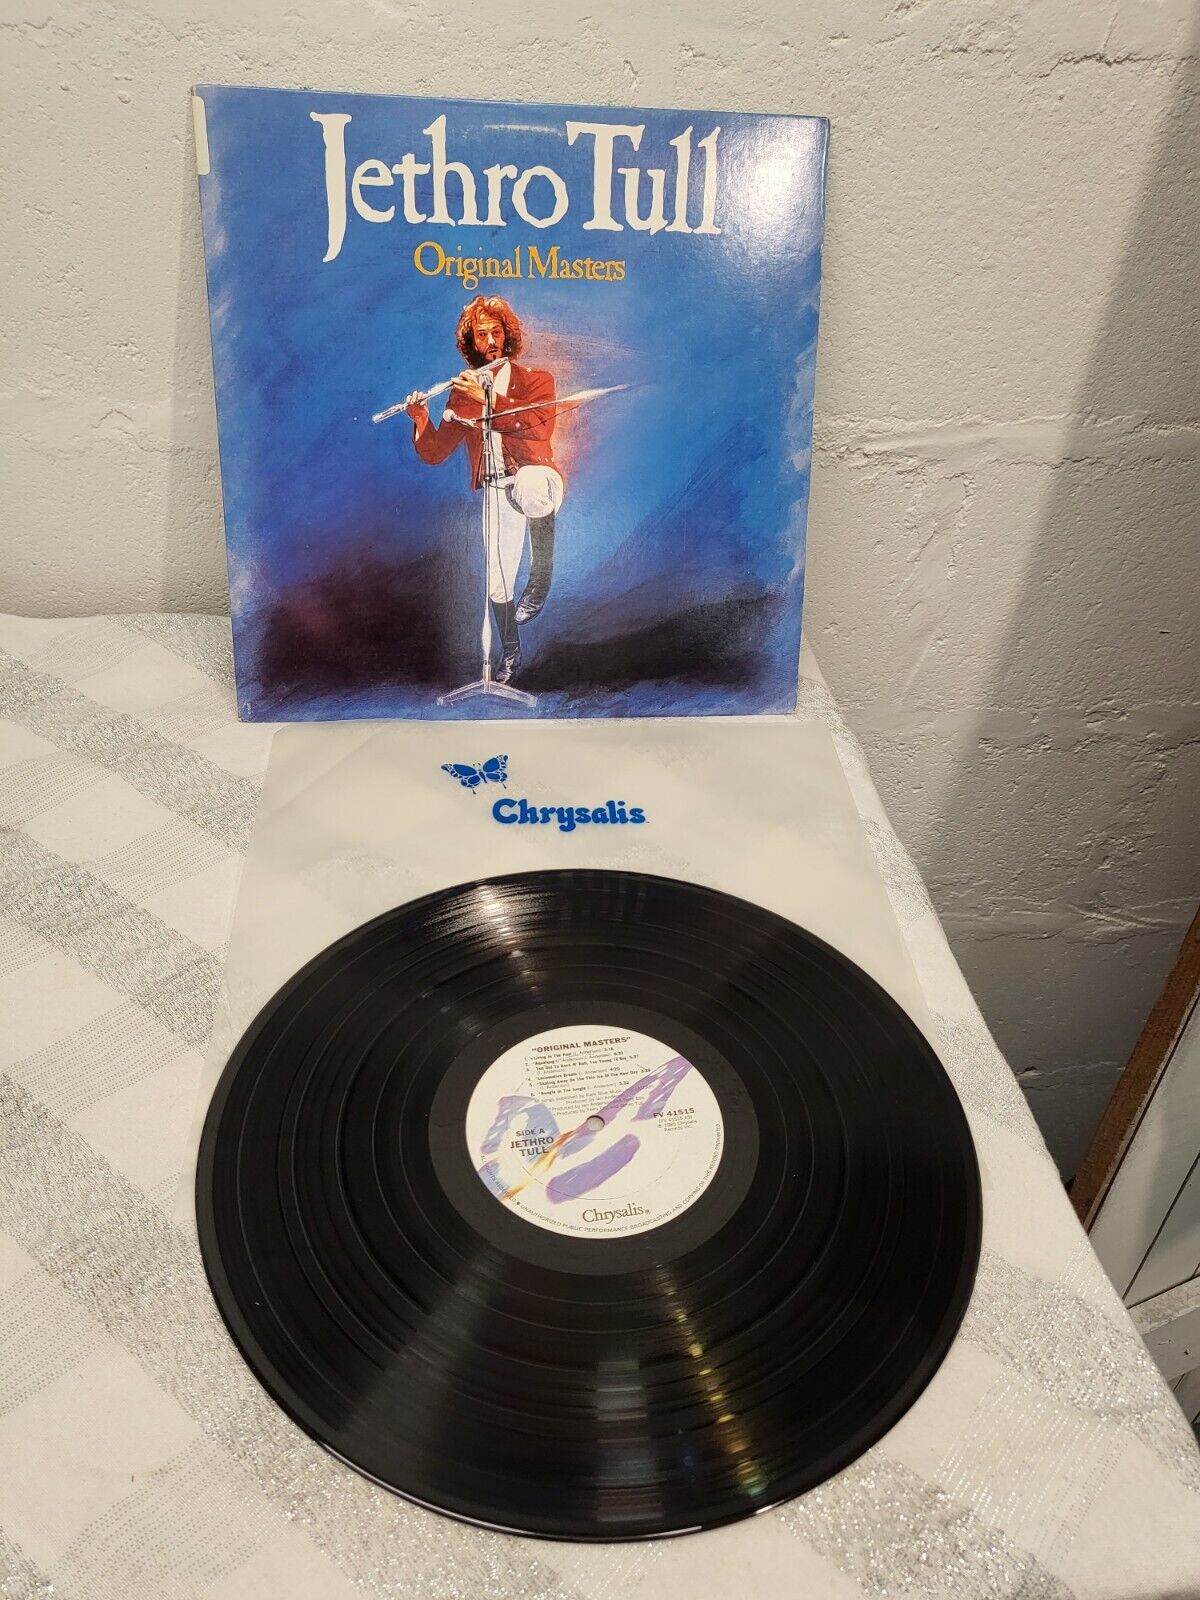 Jethro Tull “Original Masters” LP/Chrysalis FV 41515 (EX) 1985 Pressing VINYL LP